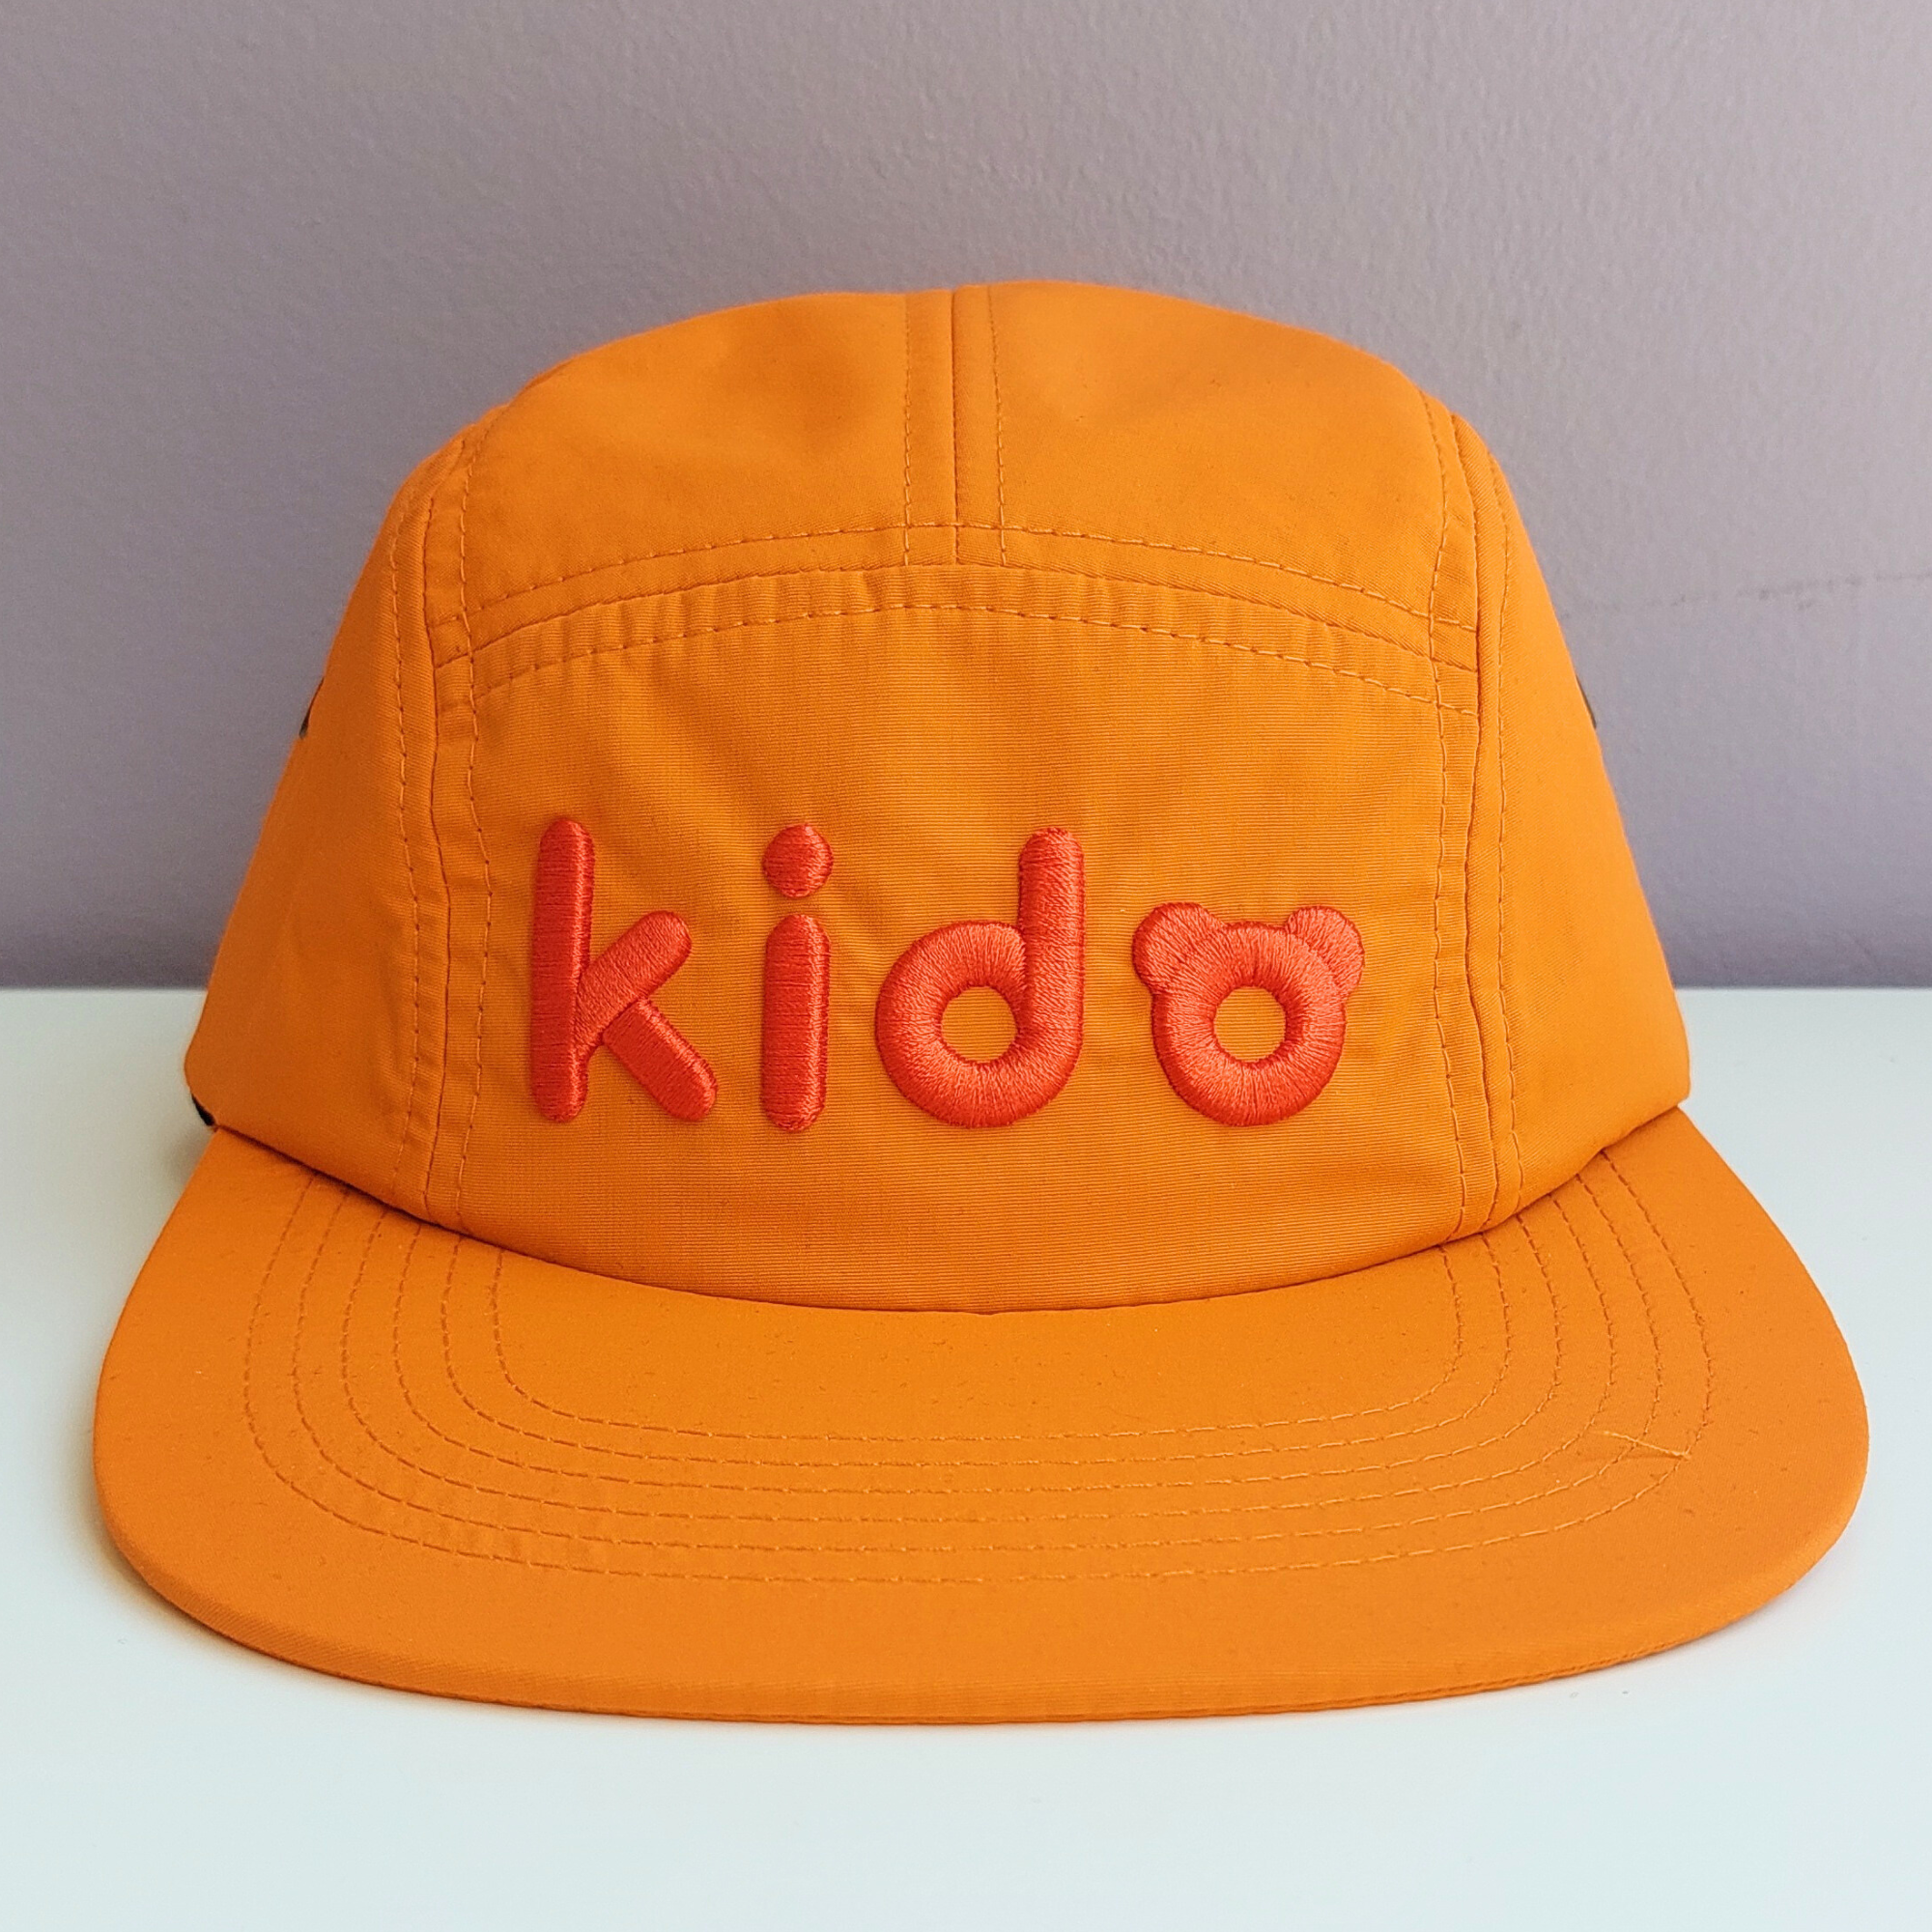 Kido 5 Panel Cap - Orange